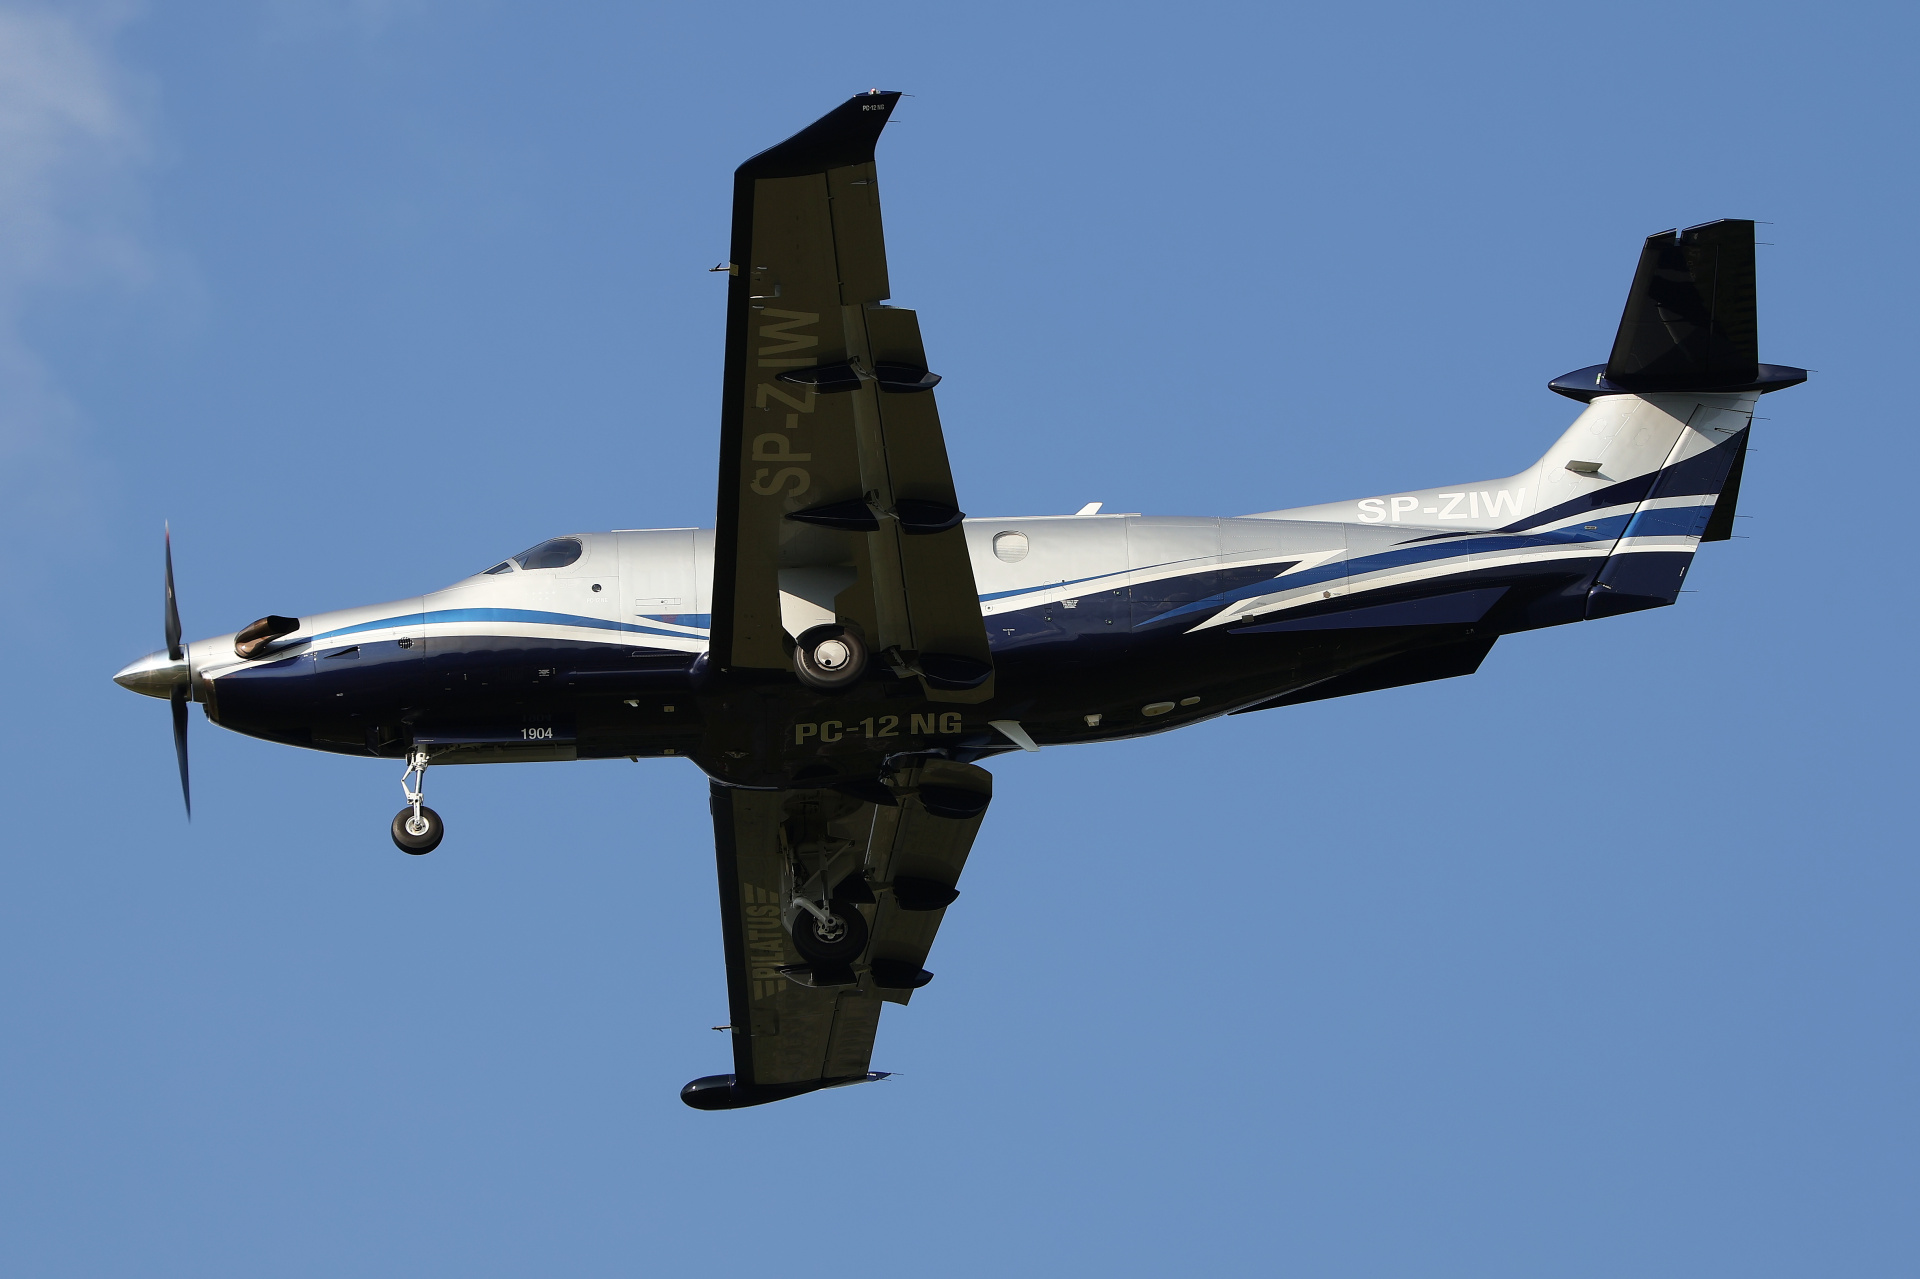 PC-12NG, SP-ZIW, Jet Story (Aircraft » EPWA Spotting » Pilatus PC-12 and revisions)